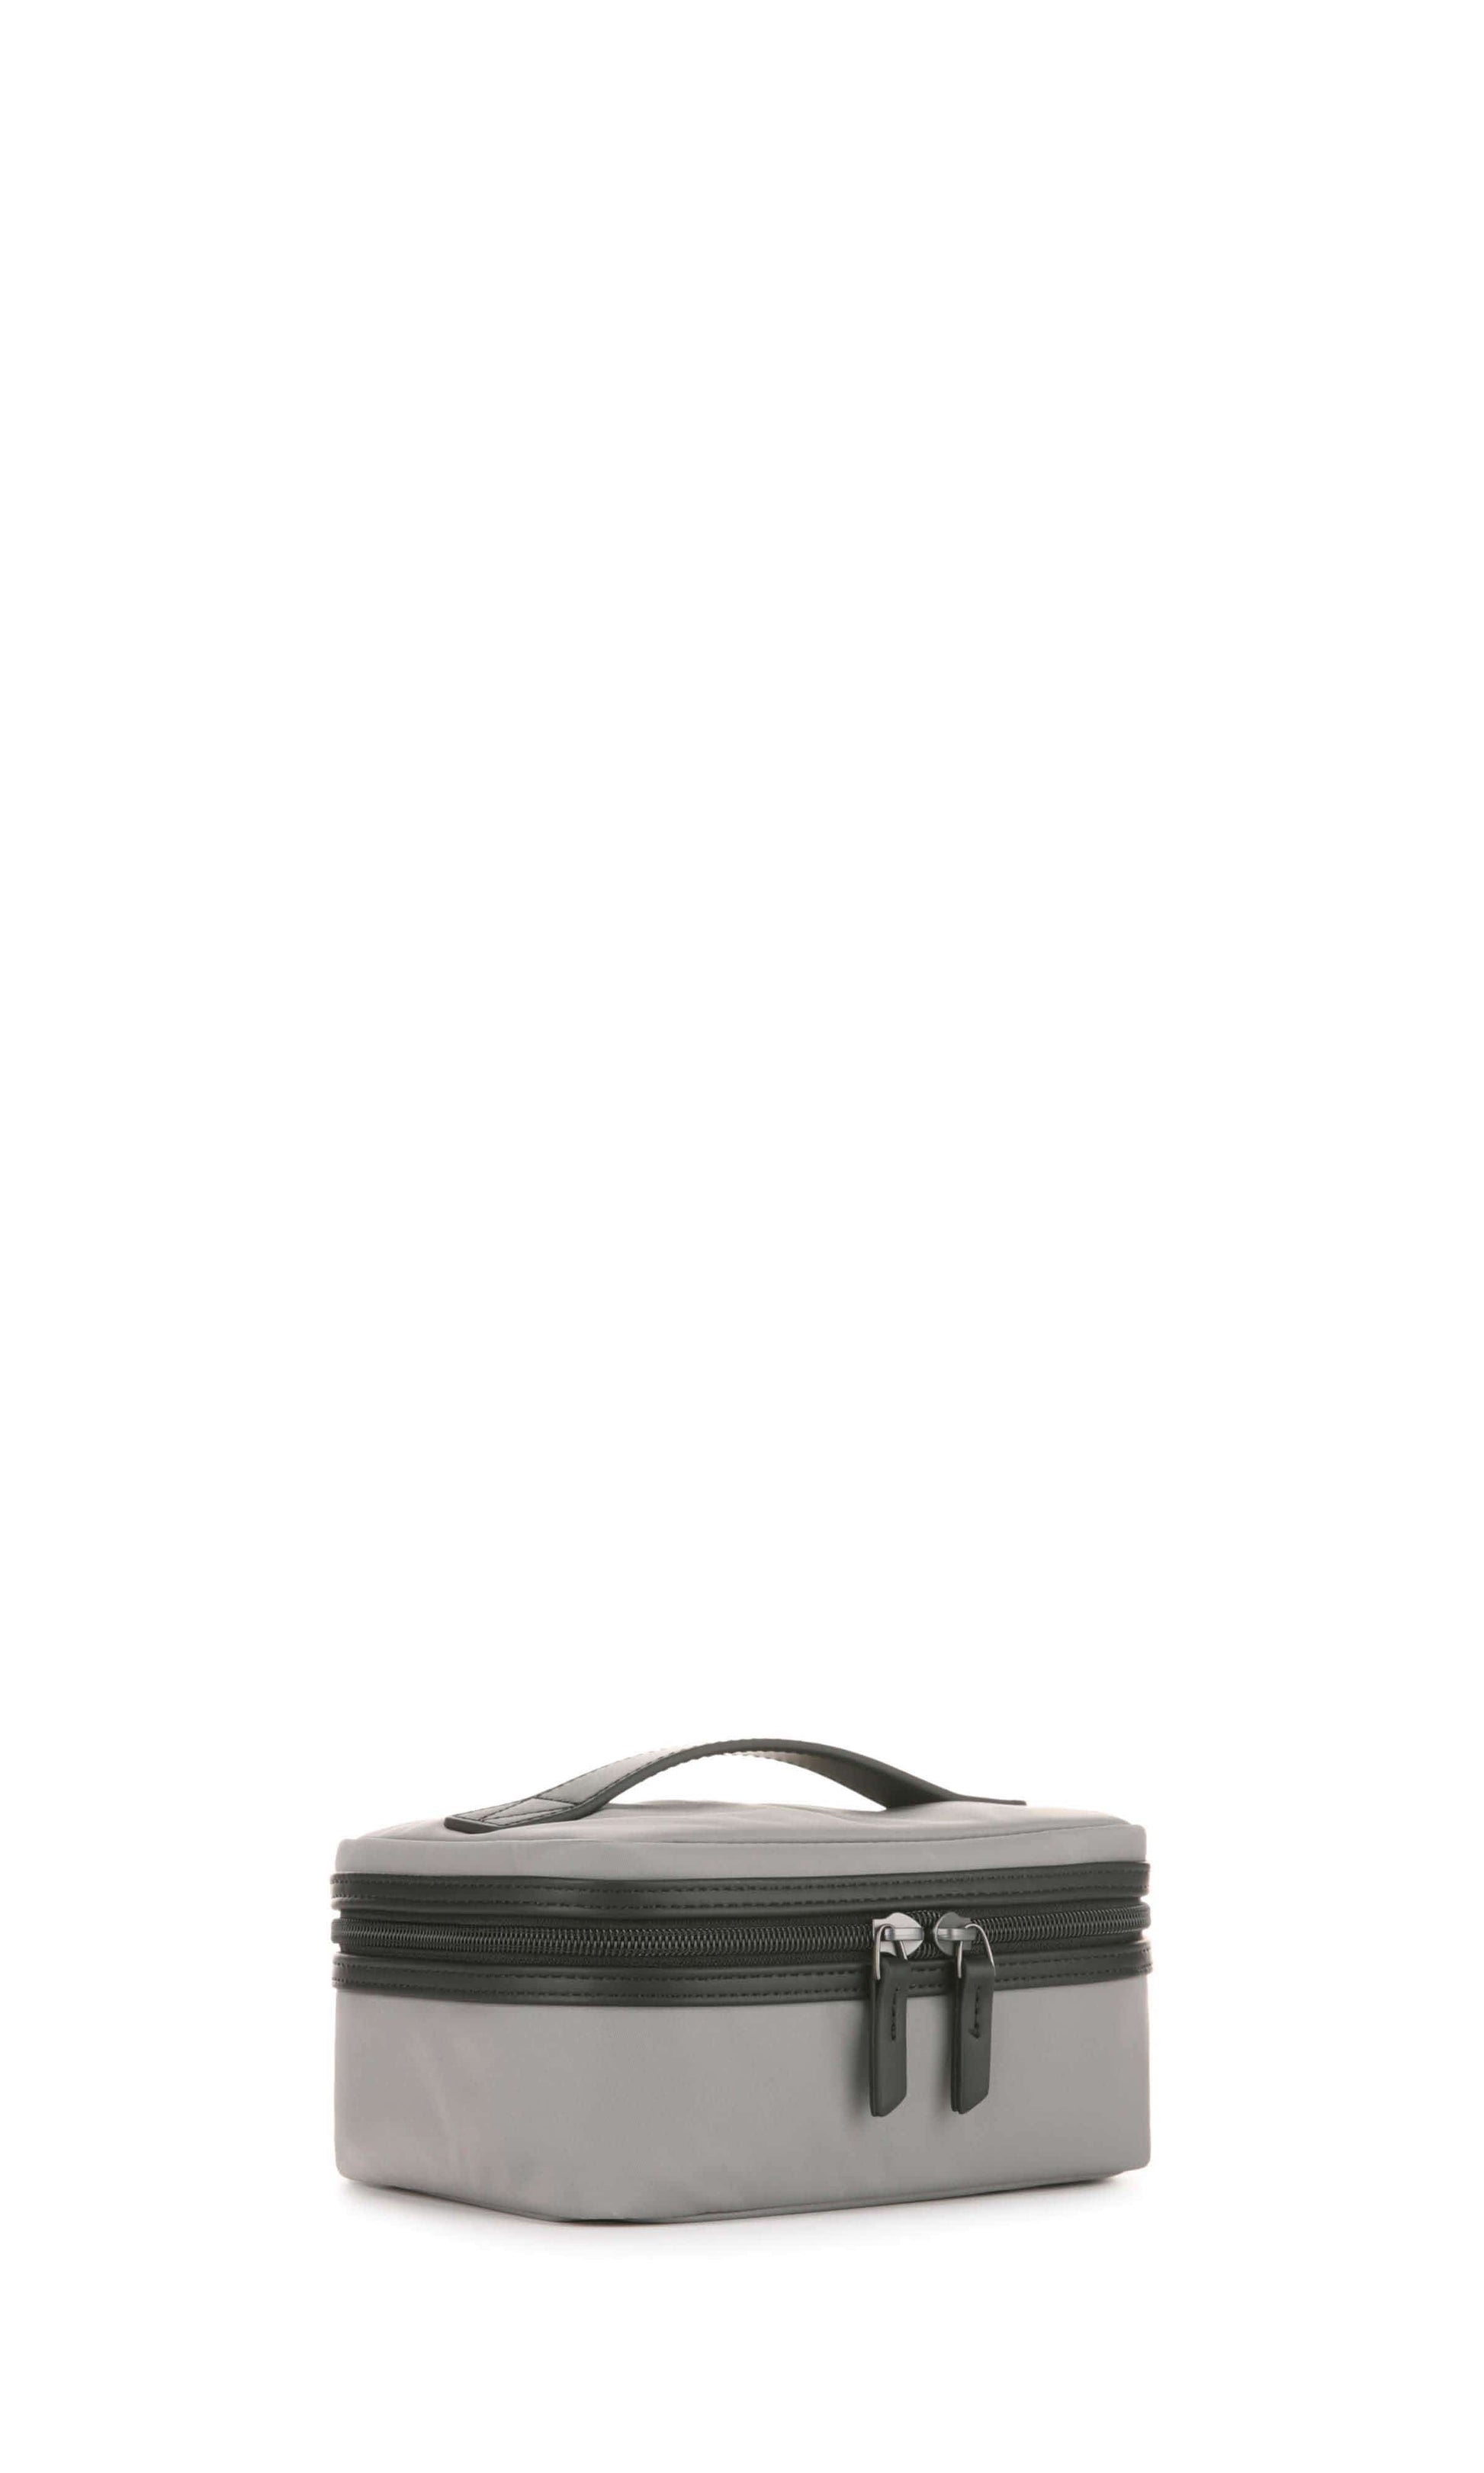 Antler Luggage -  Chelsea small wash bag in grey - Accessories Chelsea Small Wash Bag Grey | Travel Accessories | Antler UK